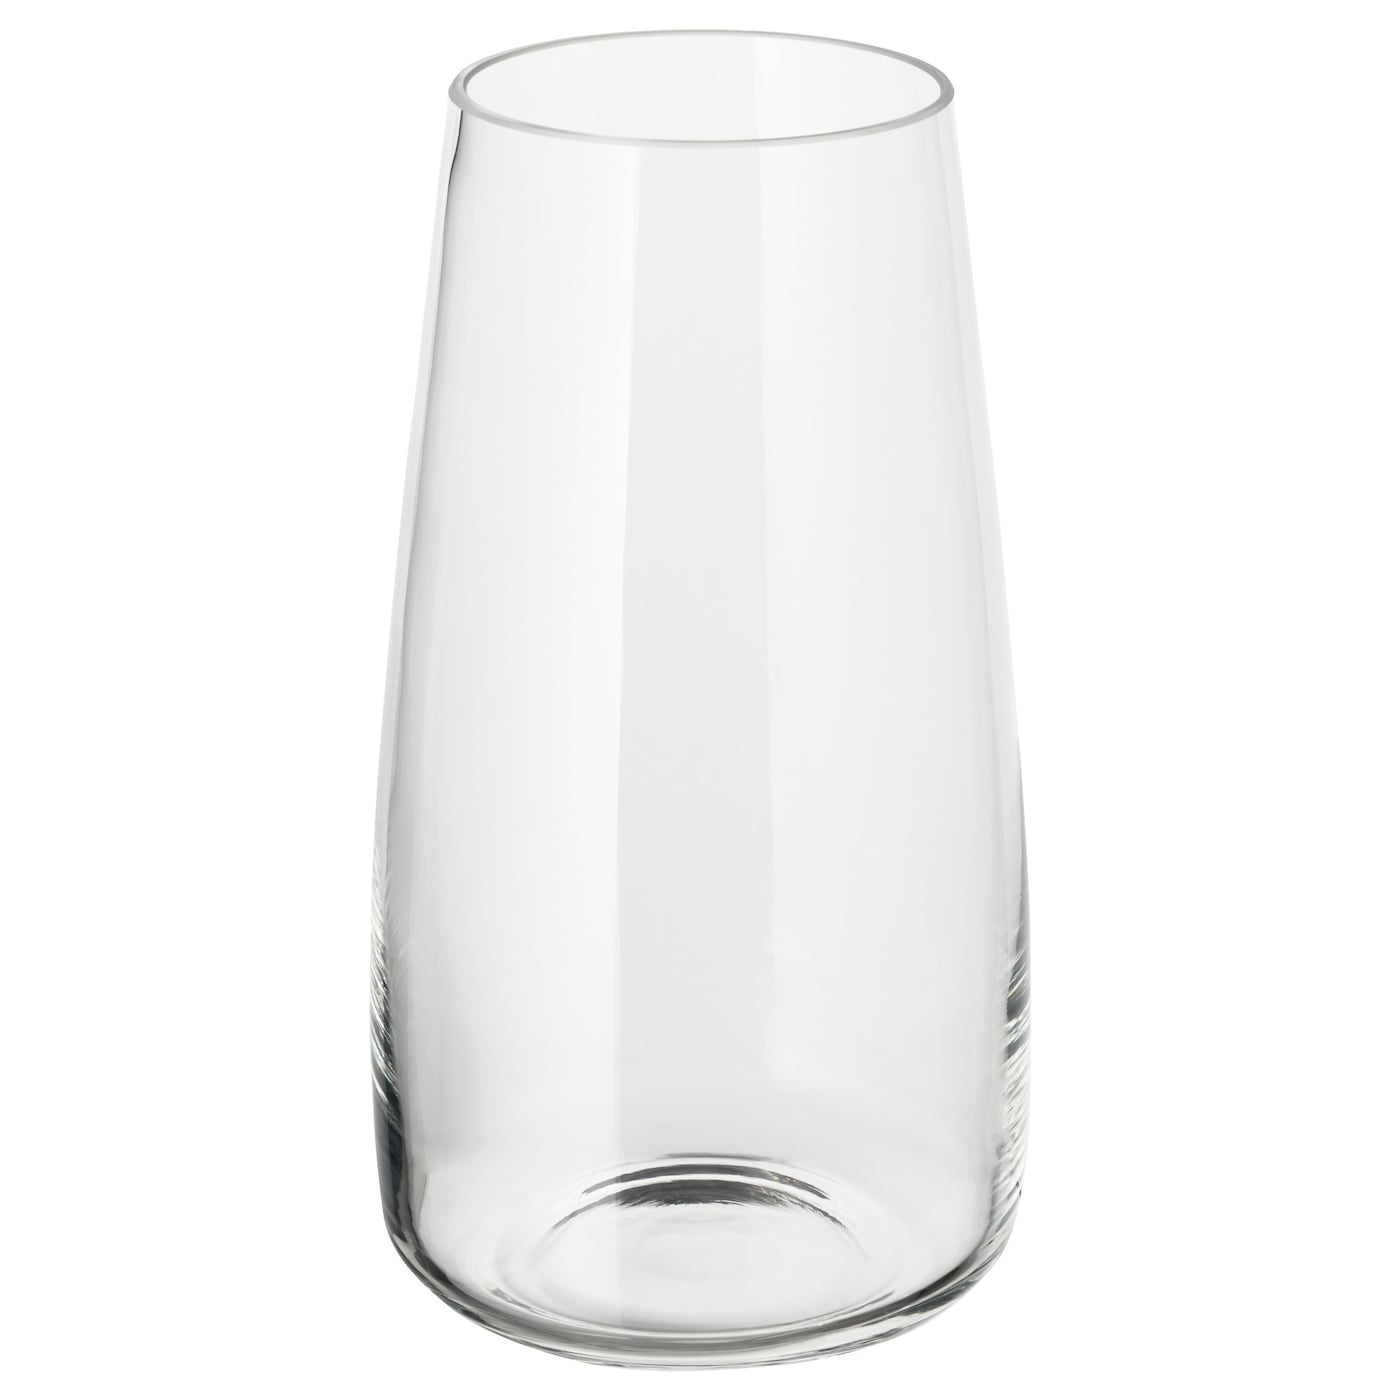 BERÄKNA БЕРЭКНА Ваза, прозрачное стекло, 30 см IKEA ваза для цветов свадебная